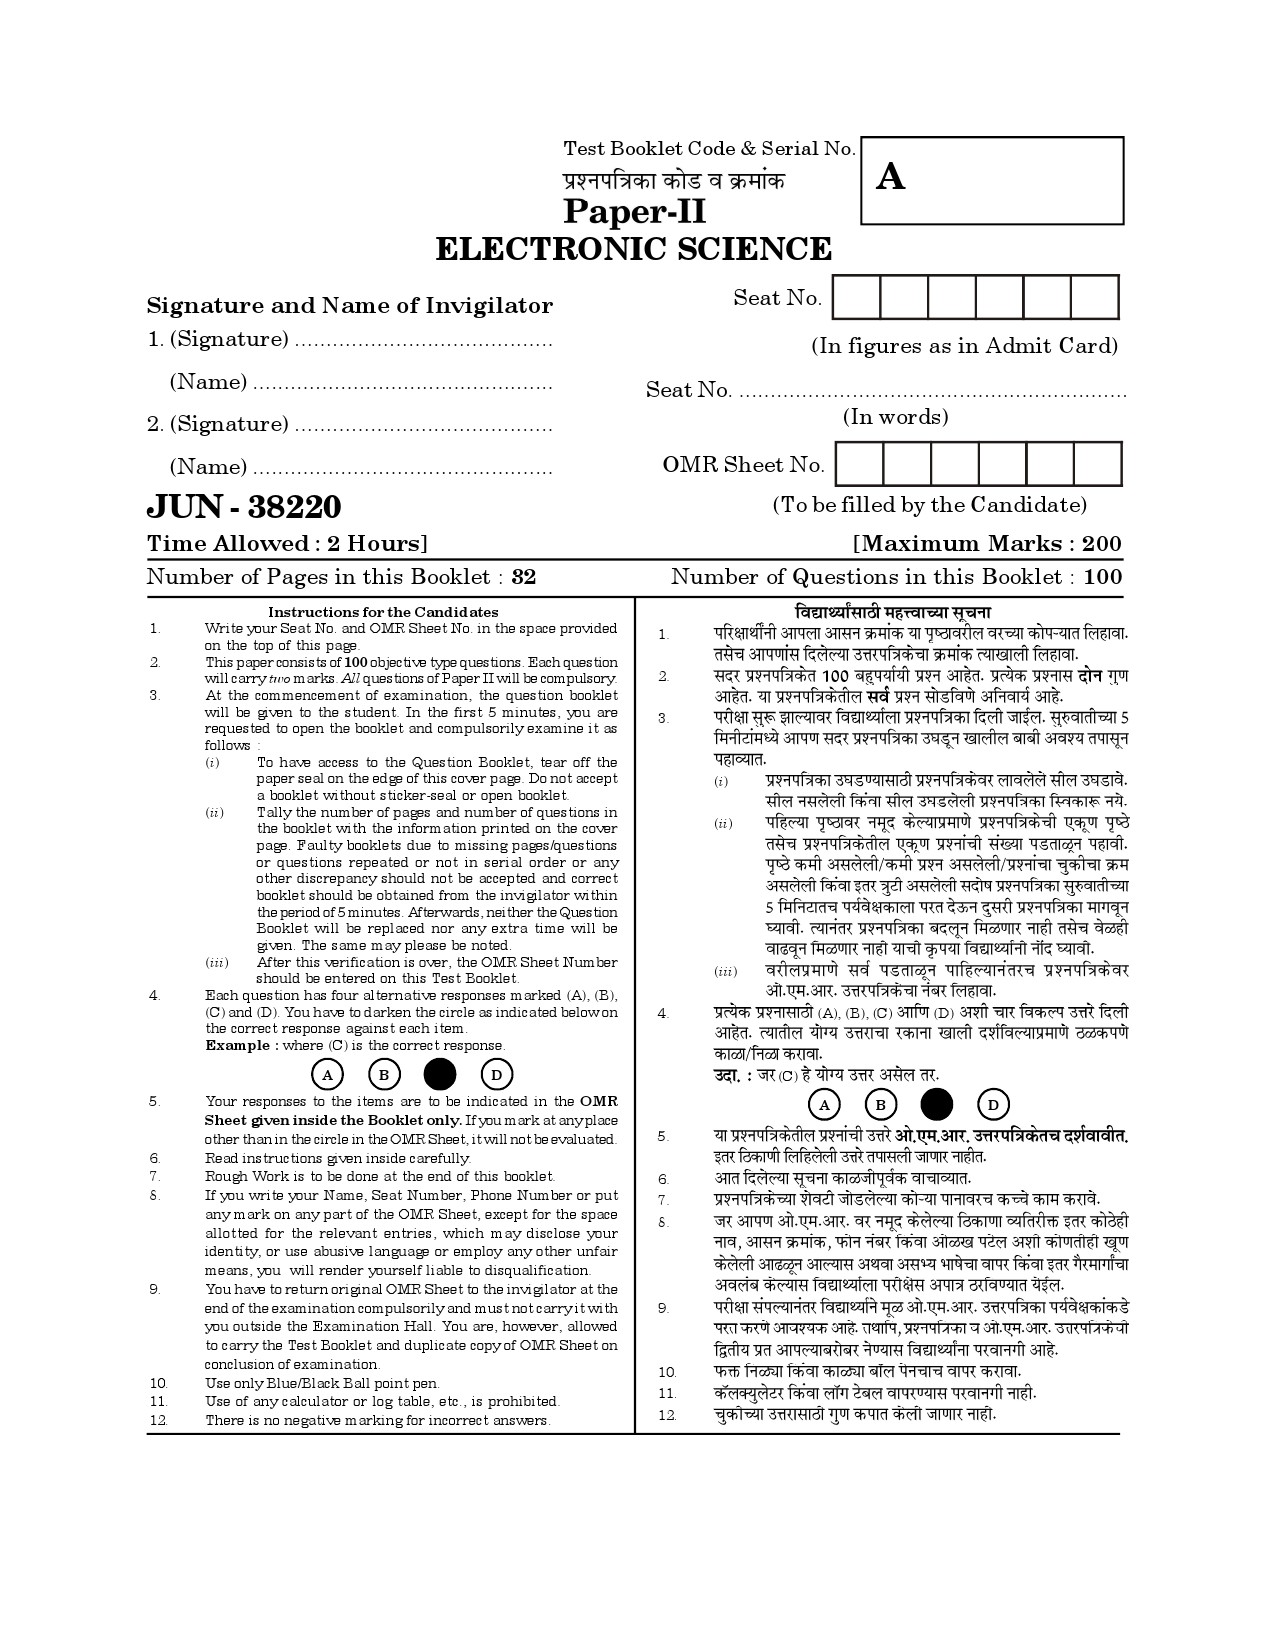 Maharashtra SET Electronics Science Question Paper II June 2020 1